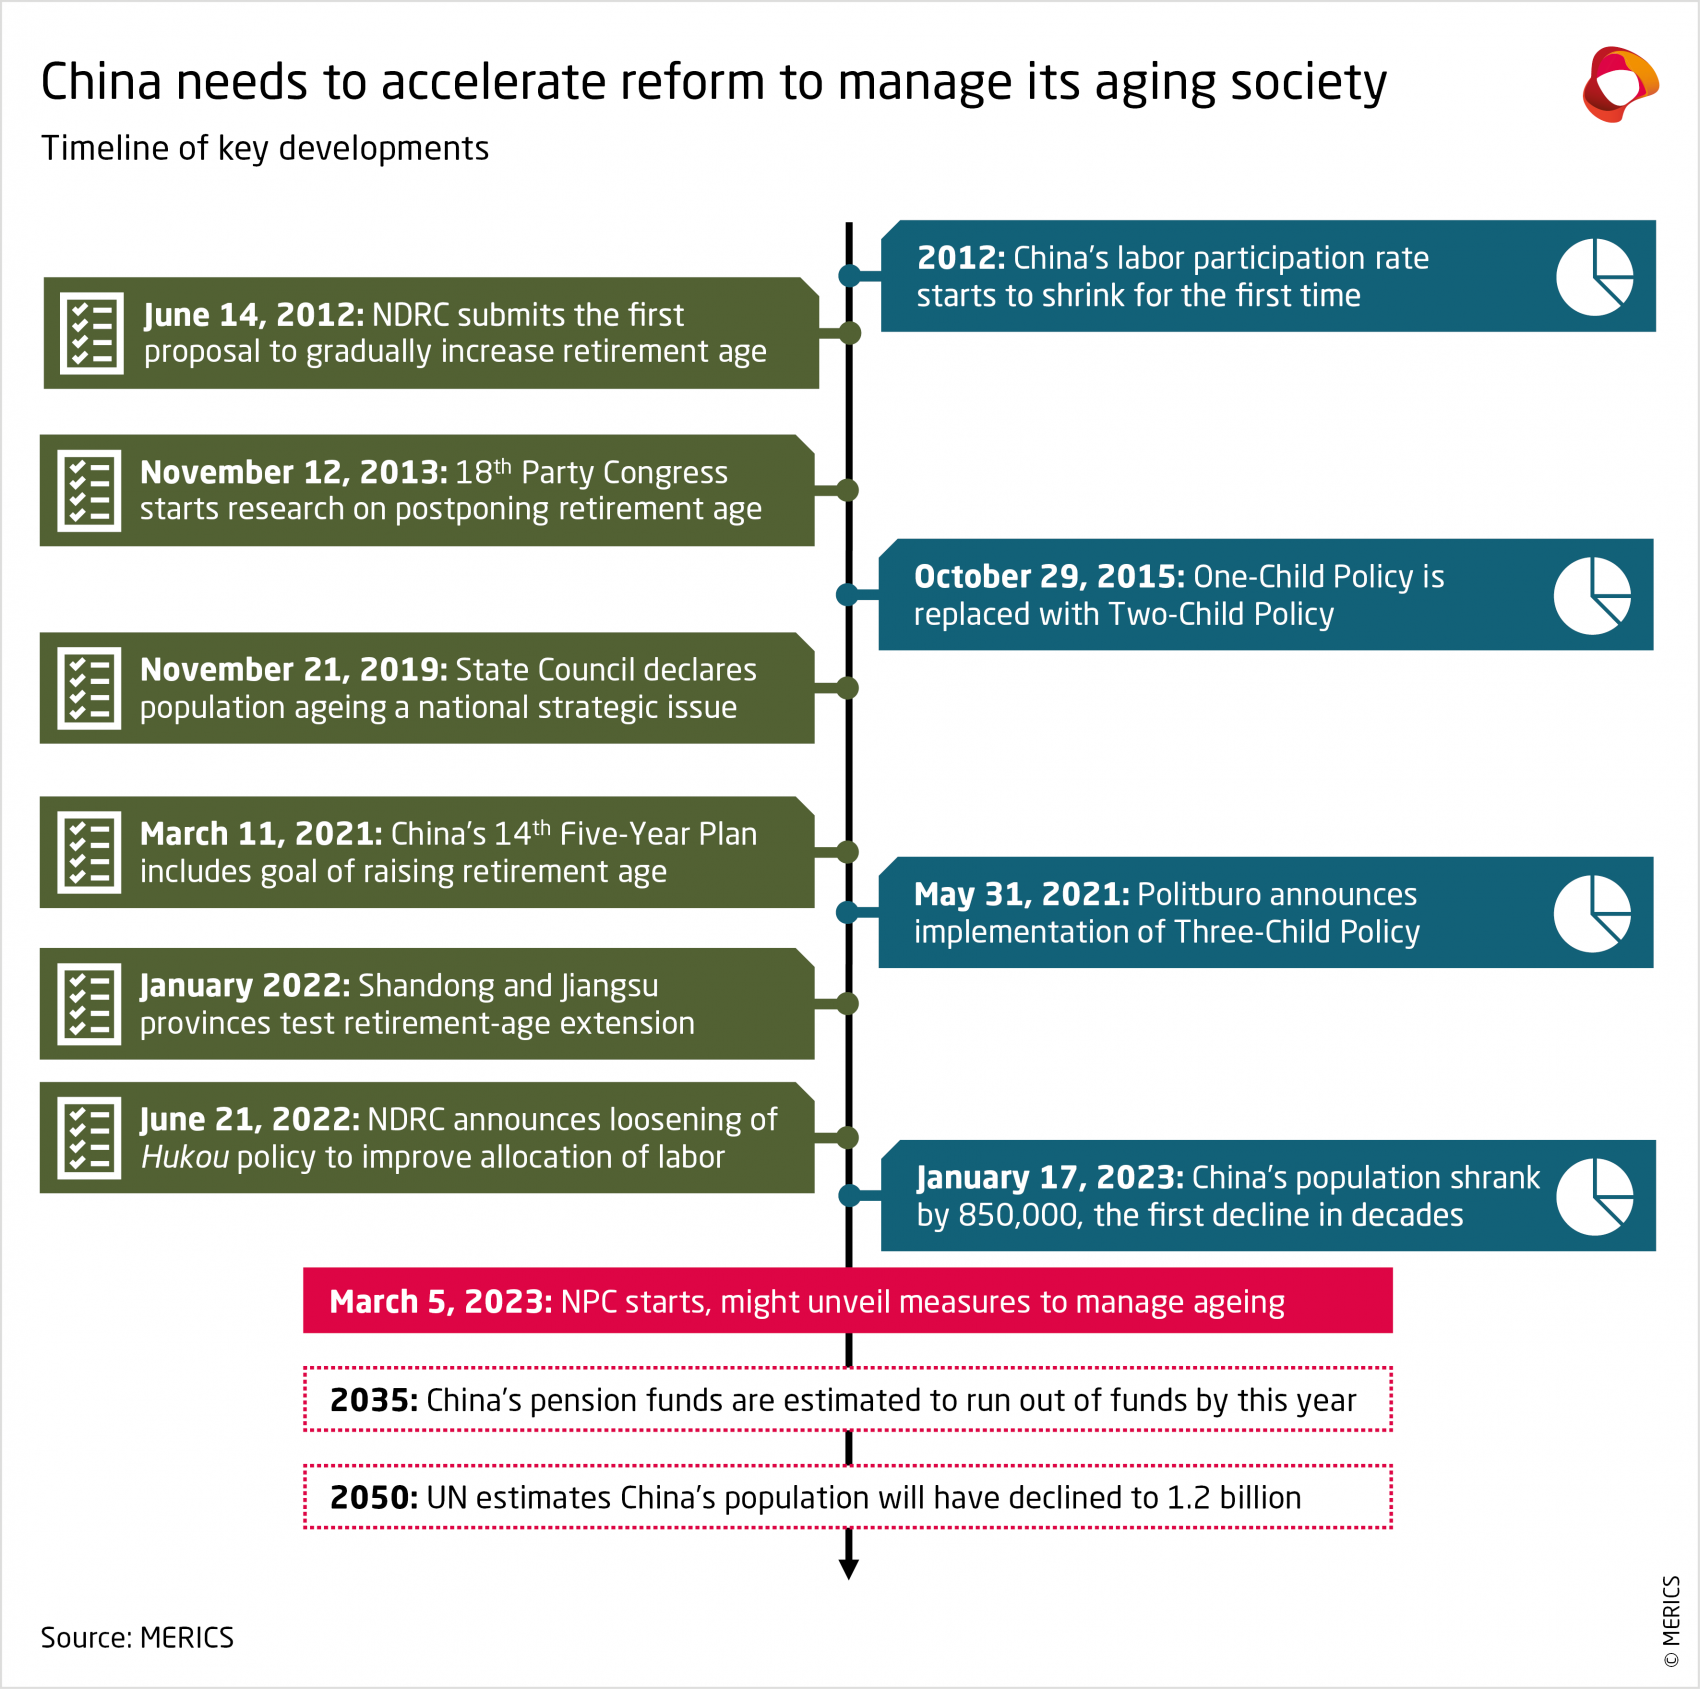 China's demographic change - key developments